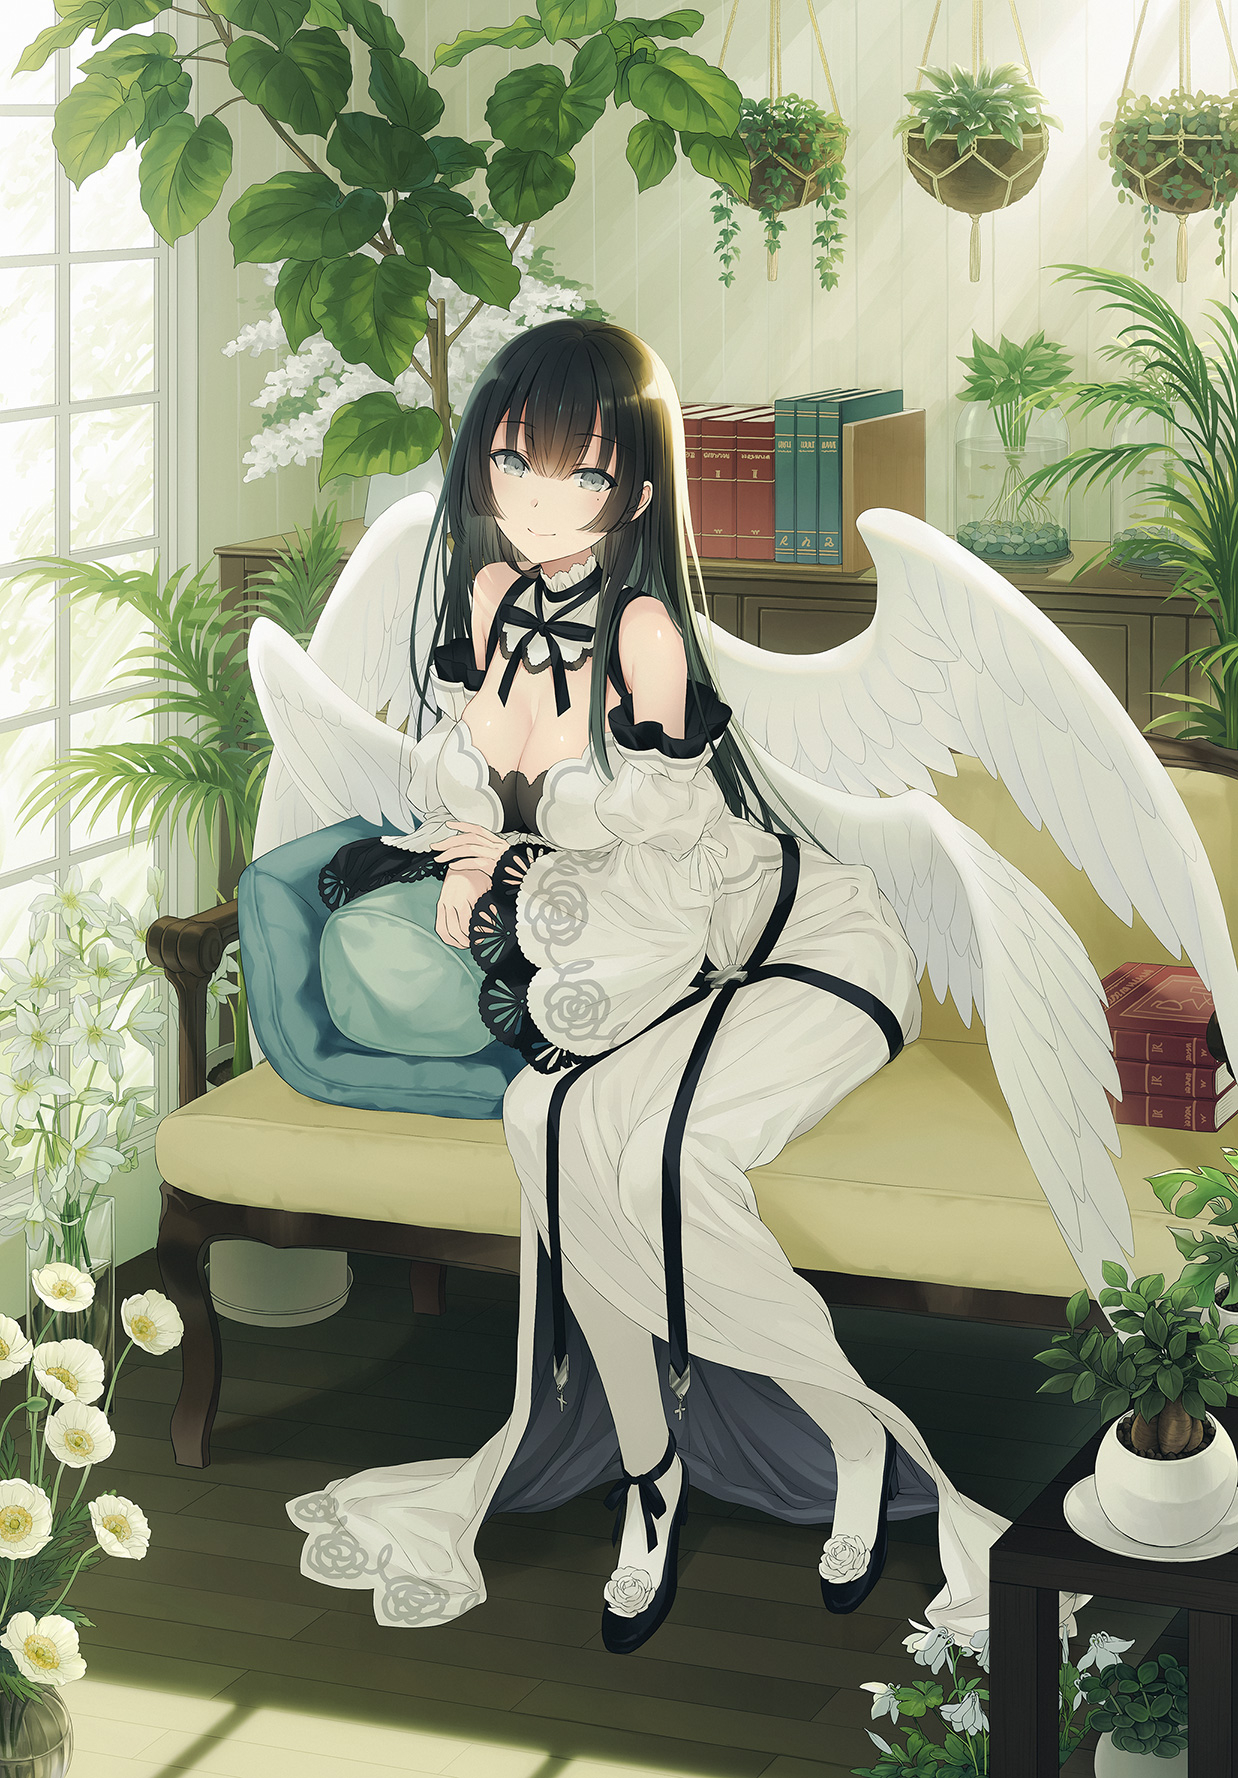 Anime 1238x1778 anime anime girls digital art artwork 2D portrait display cleavage smiling wings black hair gray eyes dress Yashiro Seika